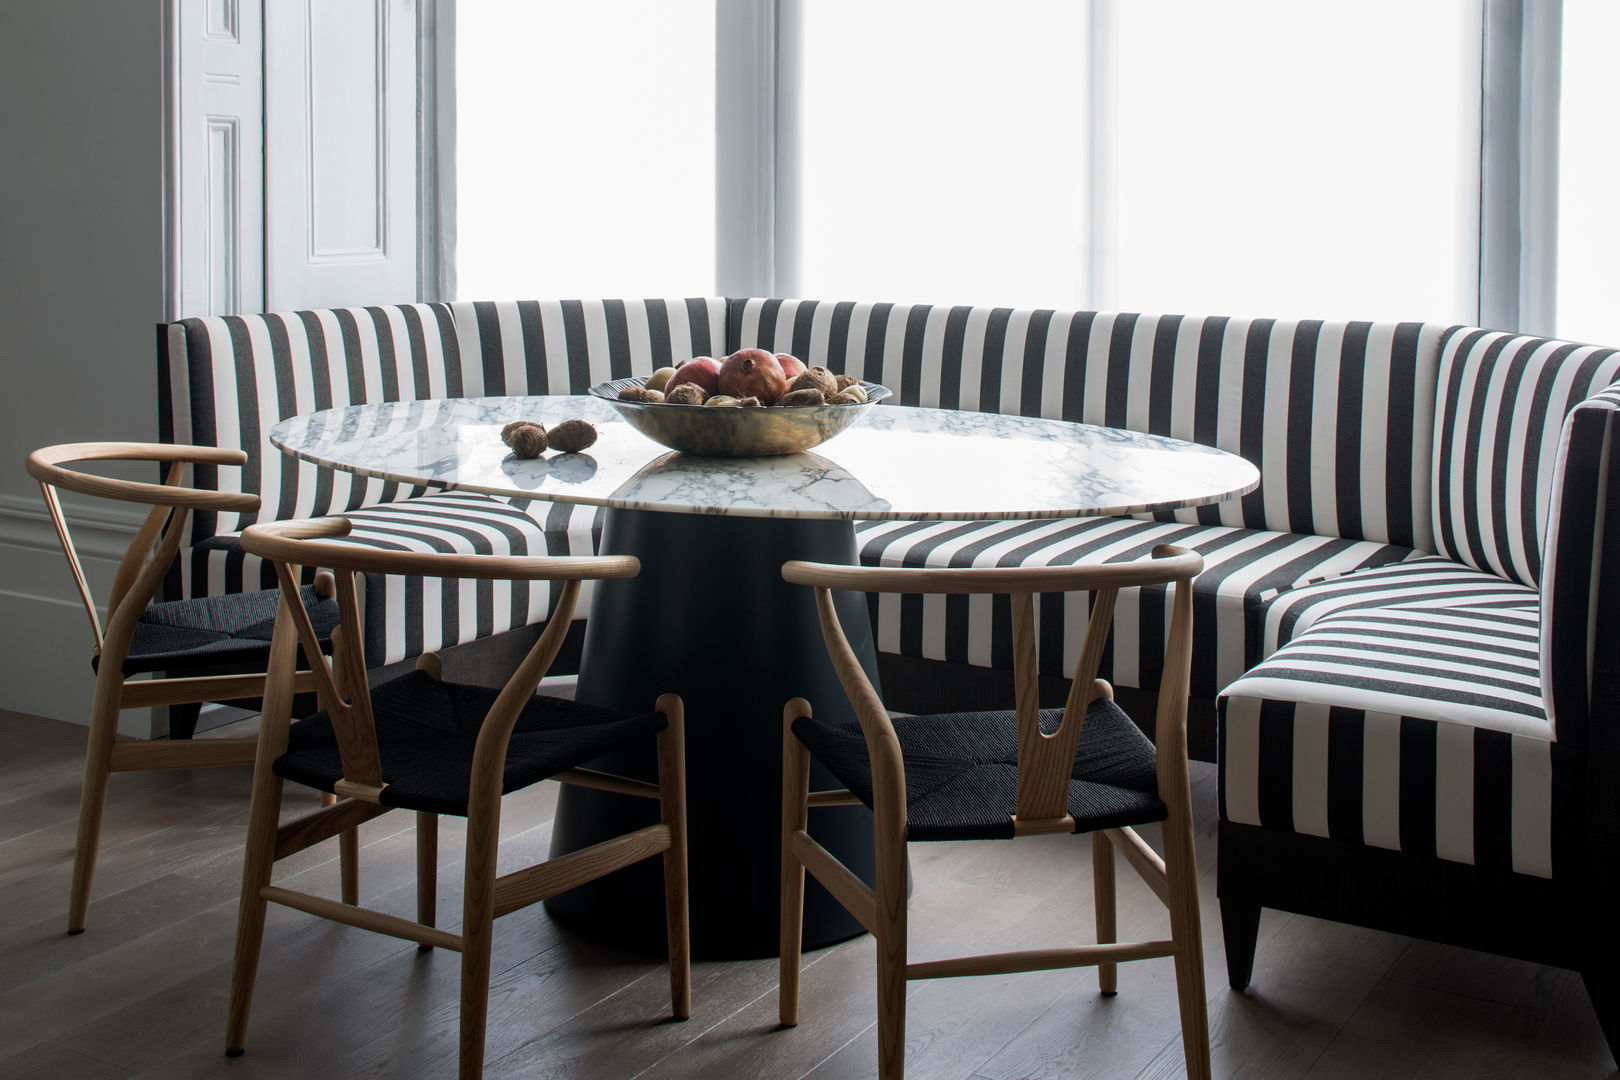 Kitchen - Belsize Park Roselind Wilson Design 모던스타일 주방 modern yet classic,modular design,marble surface,monochrome palette,breakfast bar,striped banquette,striped banquette